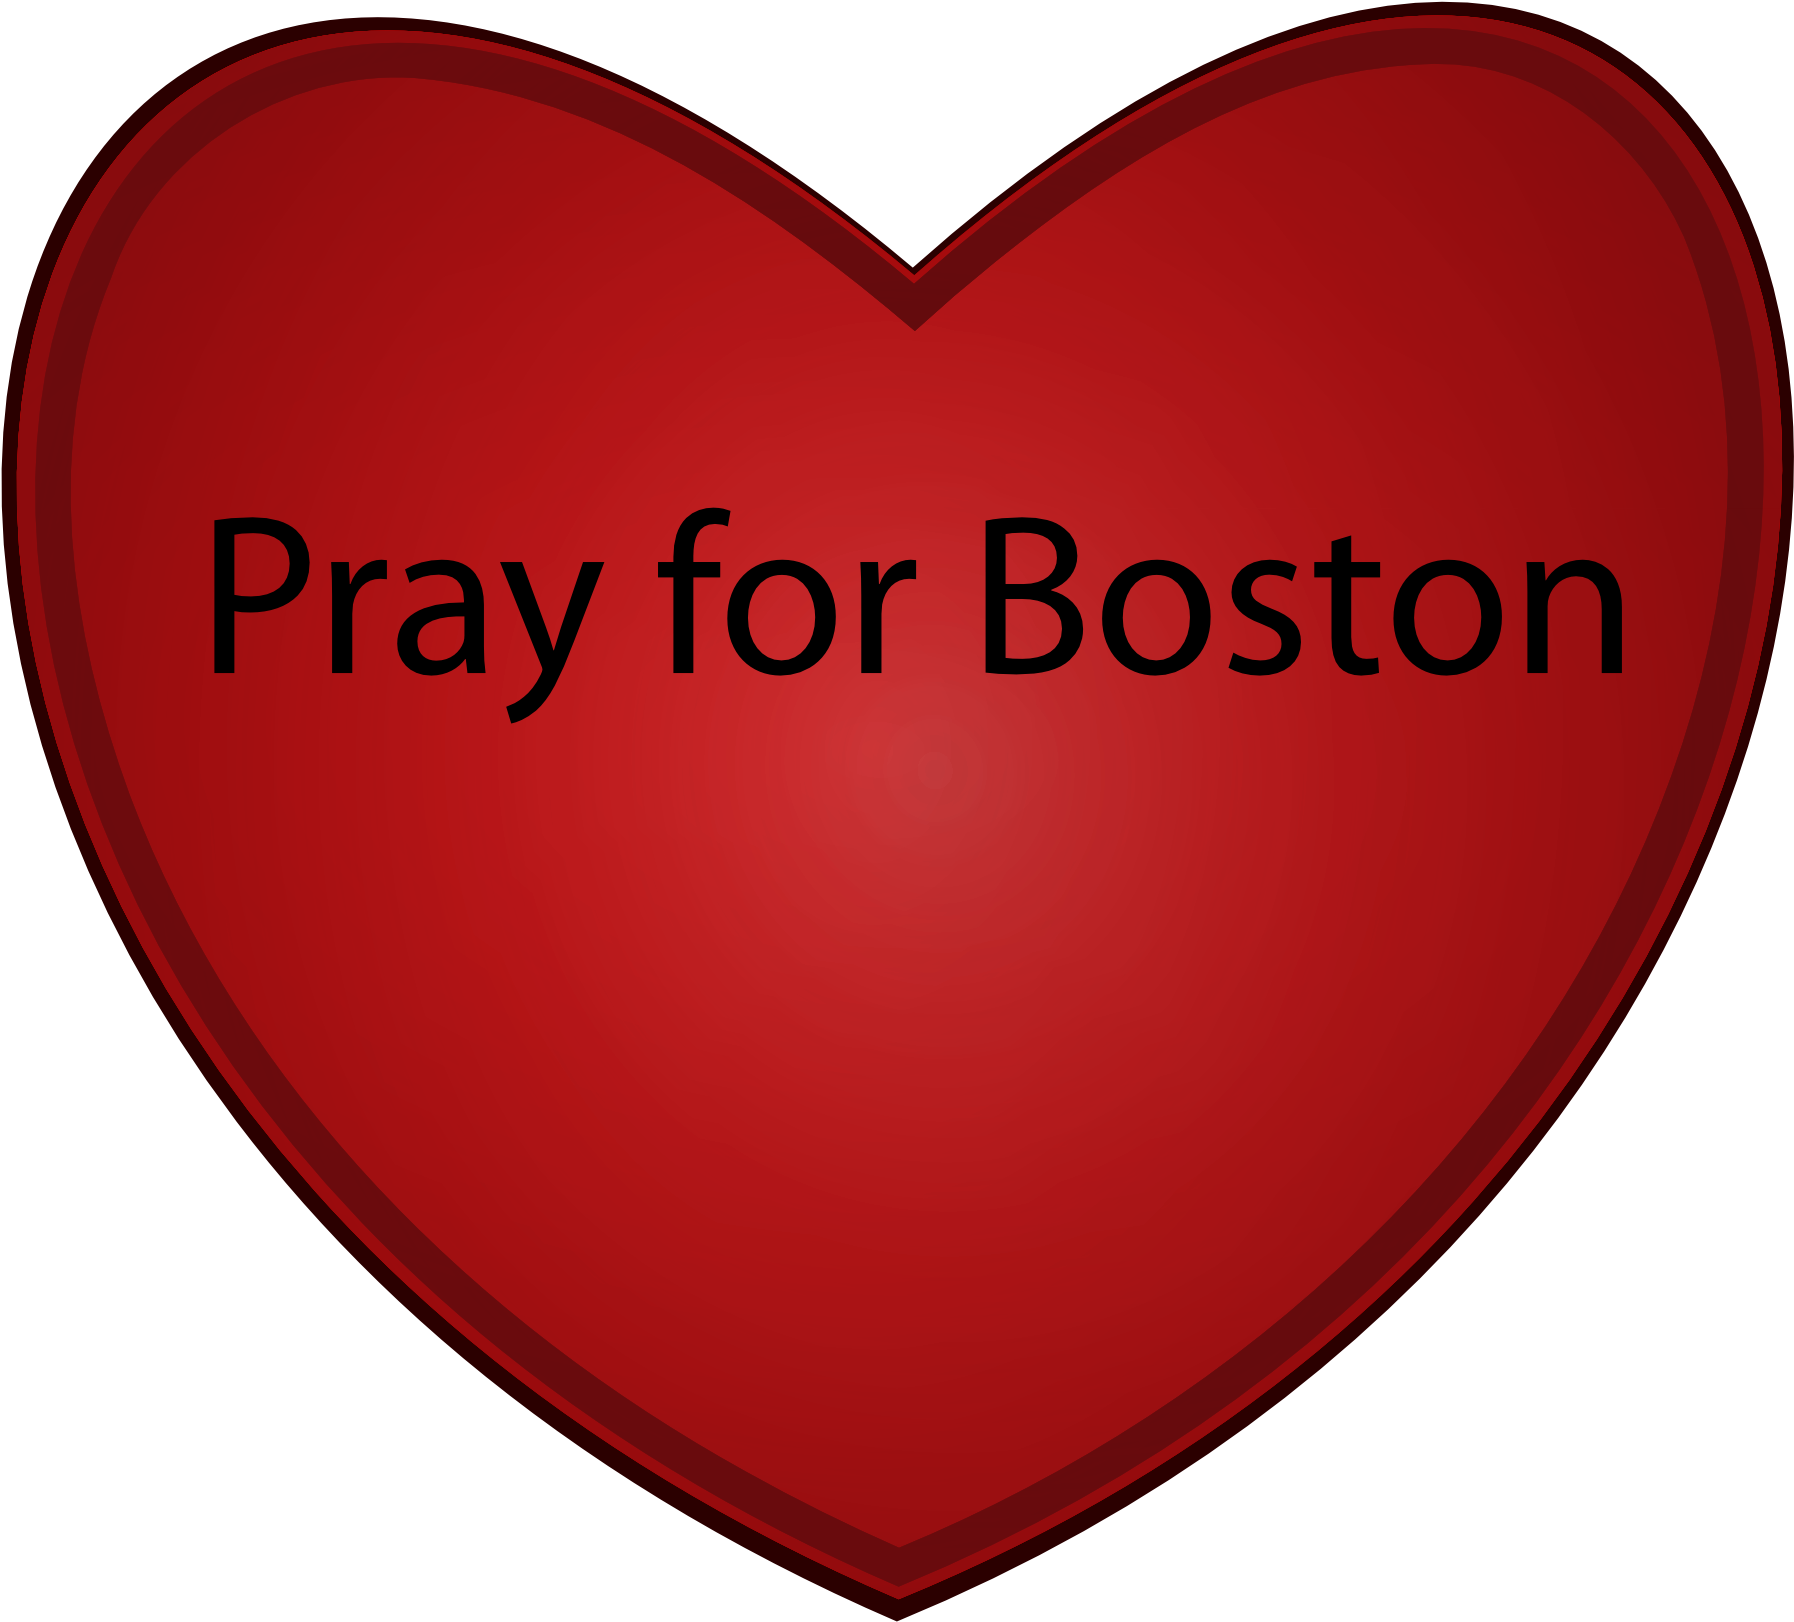 Pray For Boston Heart 23 1969px 378 - Heart (1969x1969)